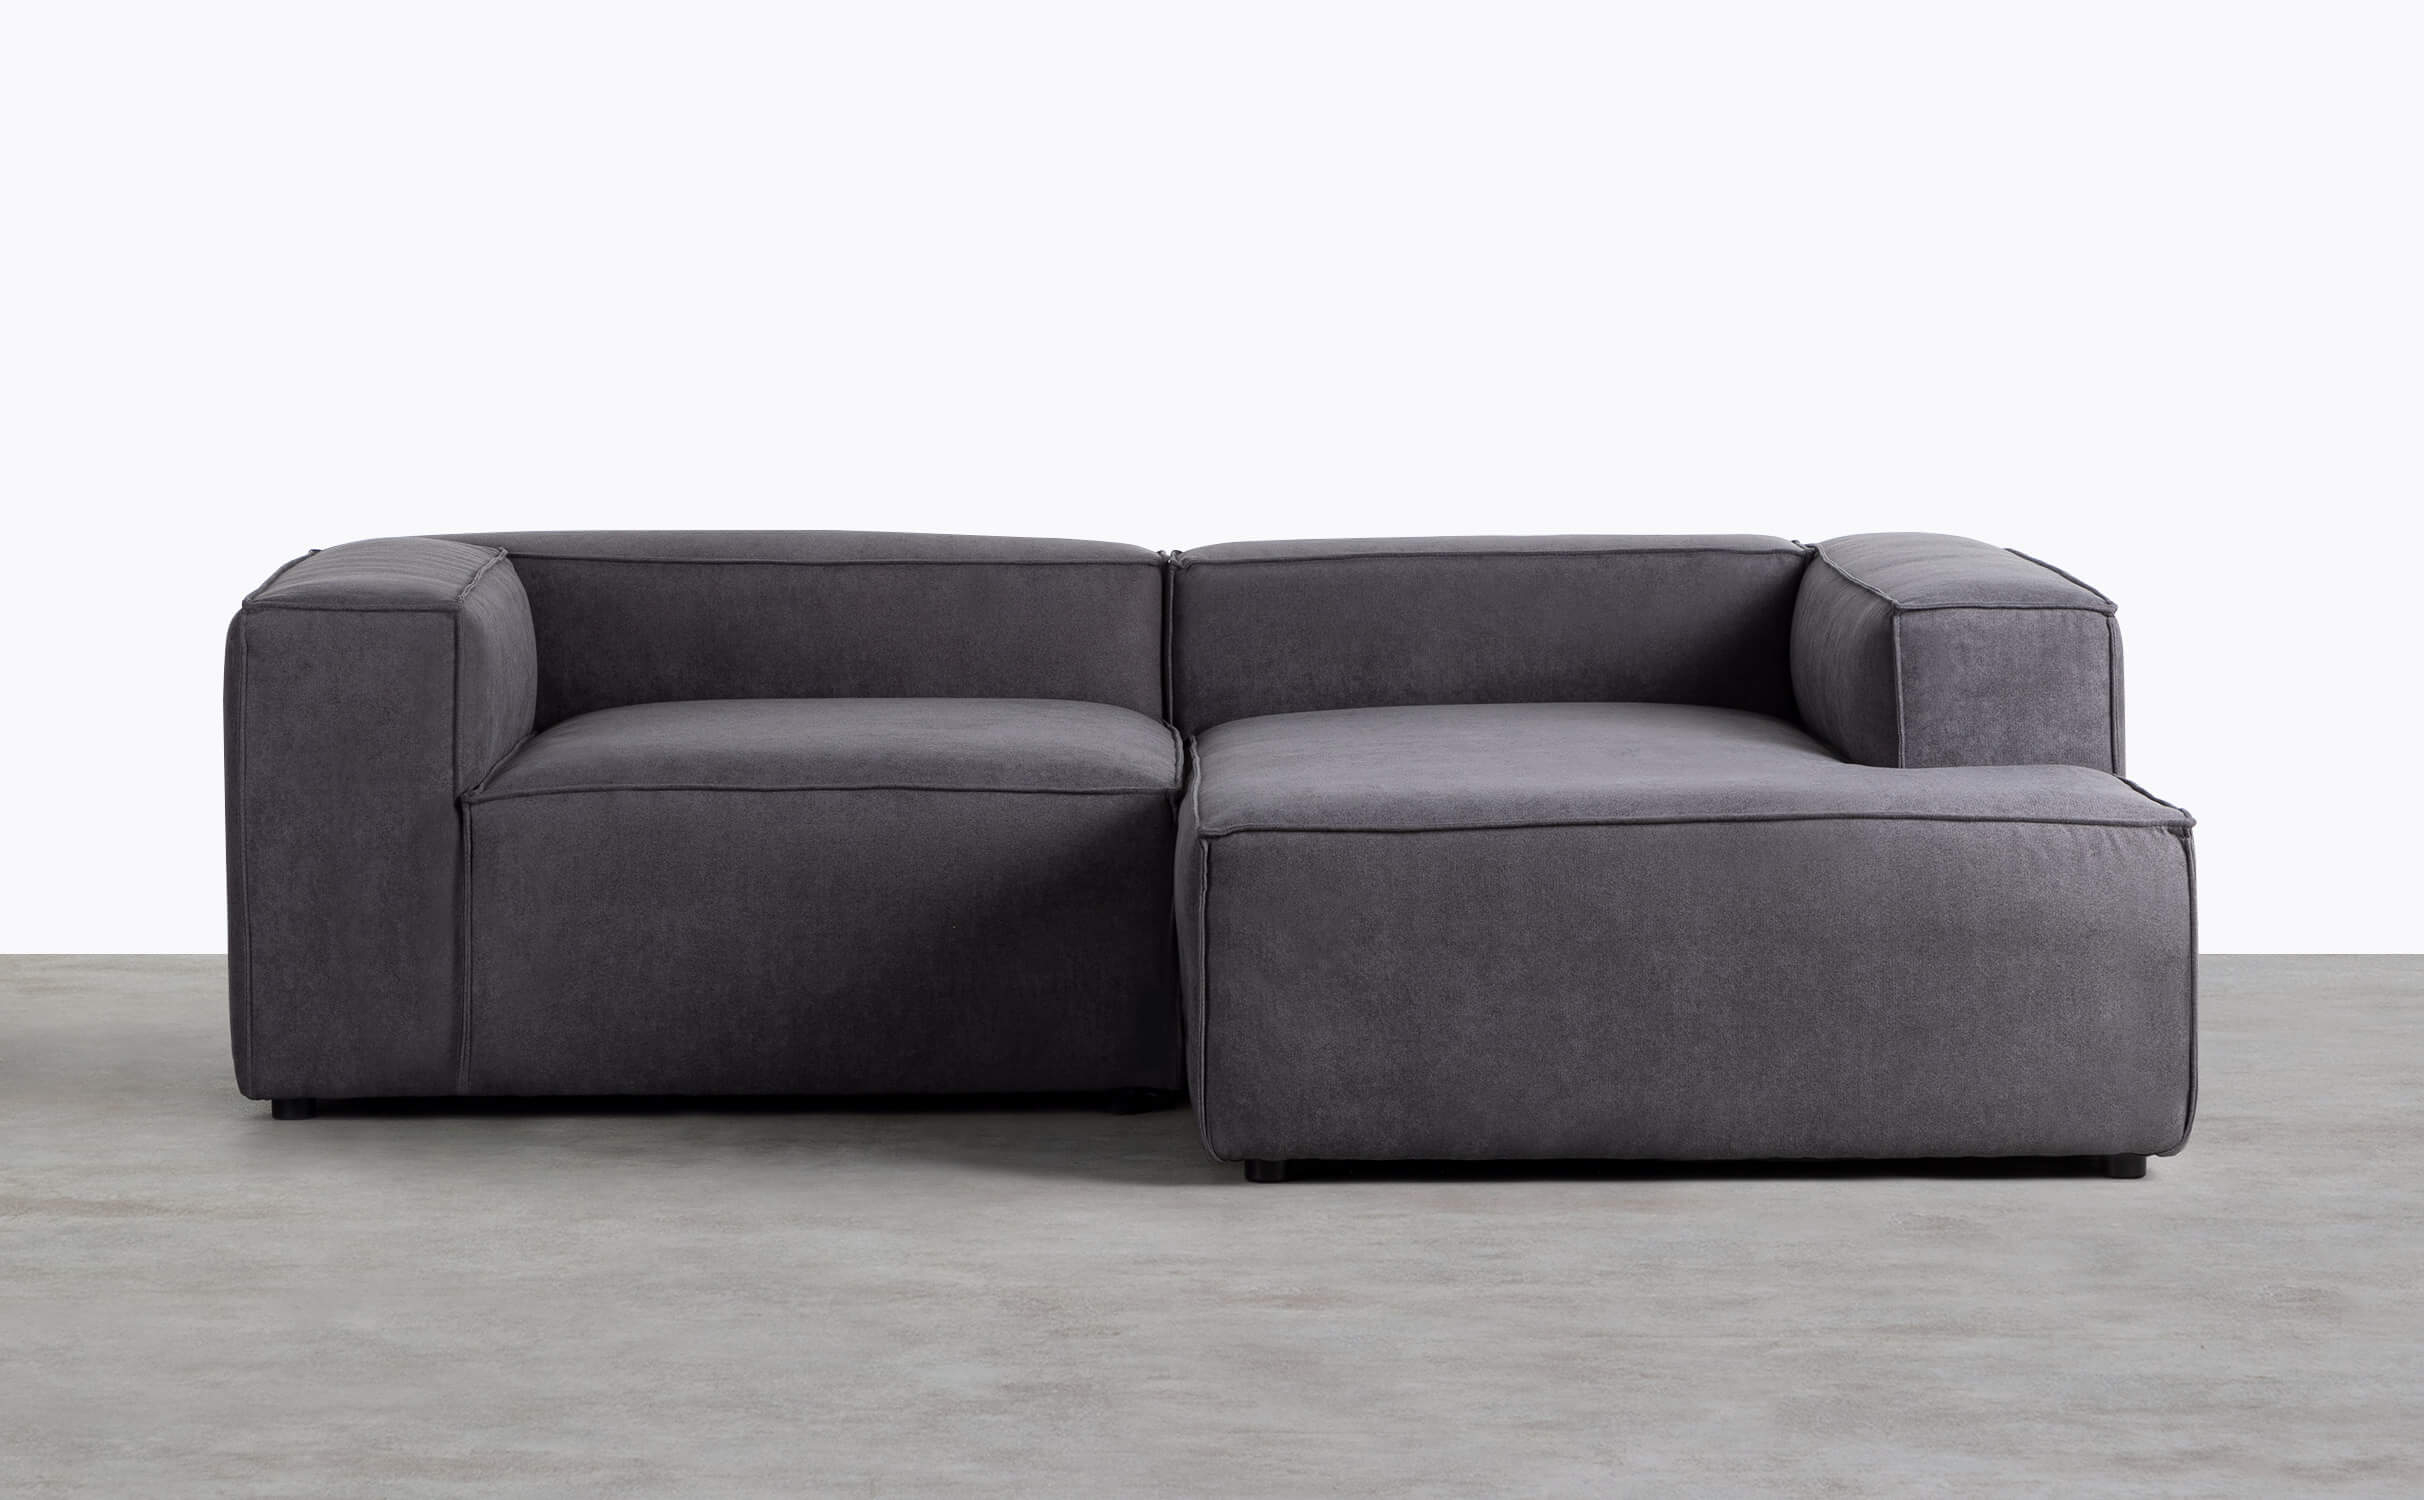 Jordan XL Modulares Chaise Longue Sofa mit Ecksessel aus Stoff, Galeriebild 1